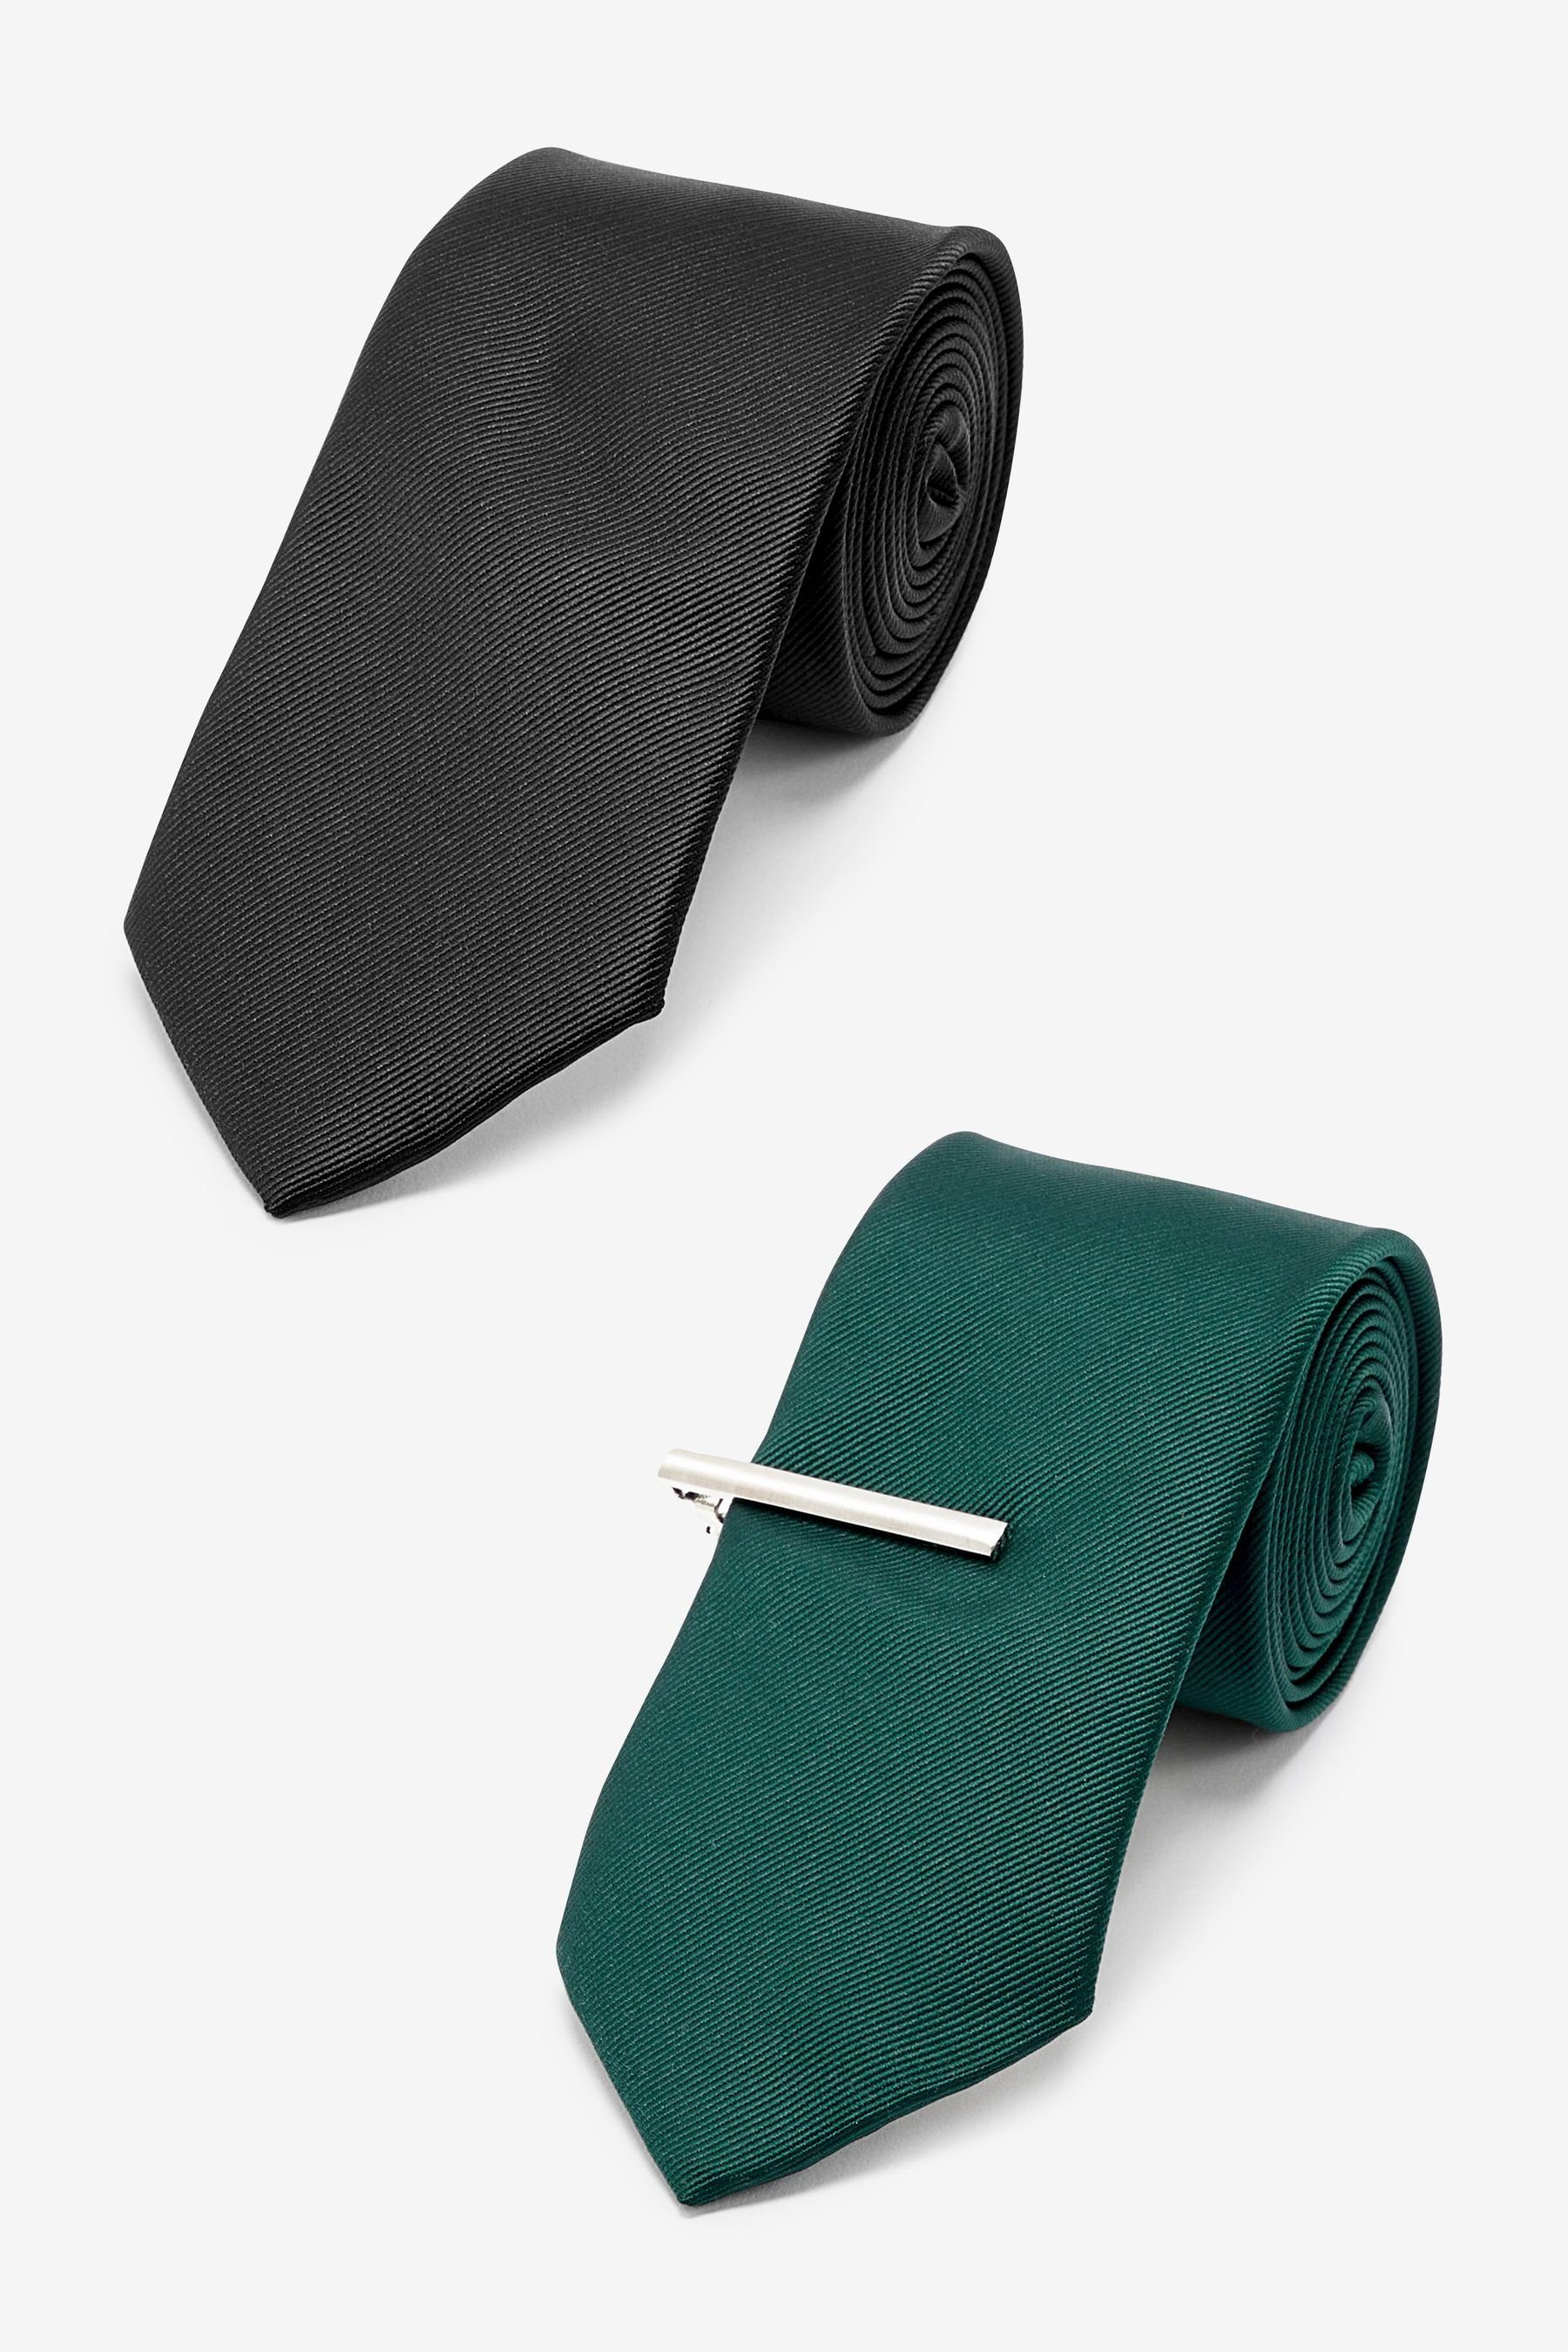 Next Krawatte Krawatten aus Twill mit Krawattennadel, 2 Stück (3-St) Black/Forest Green